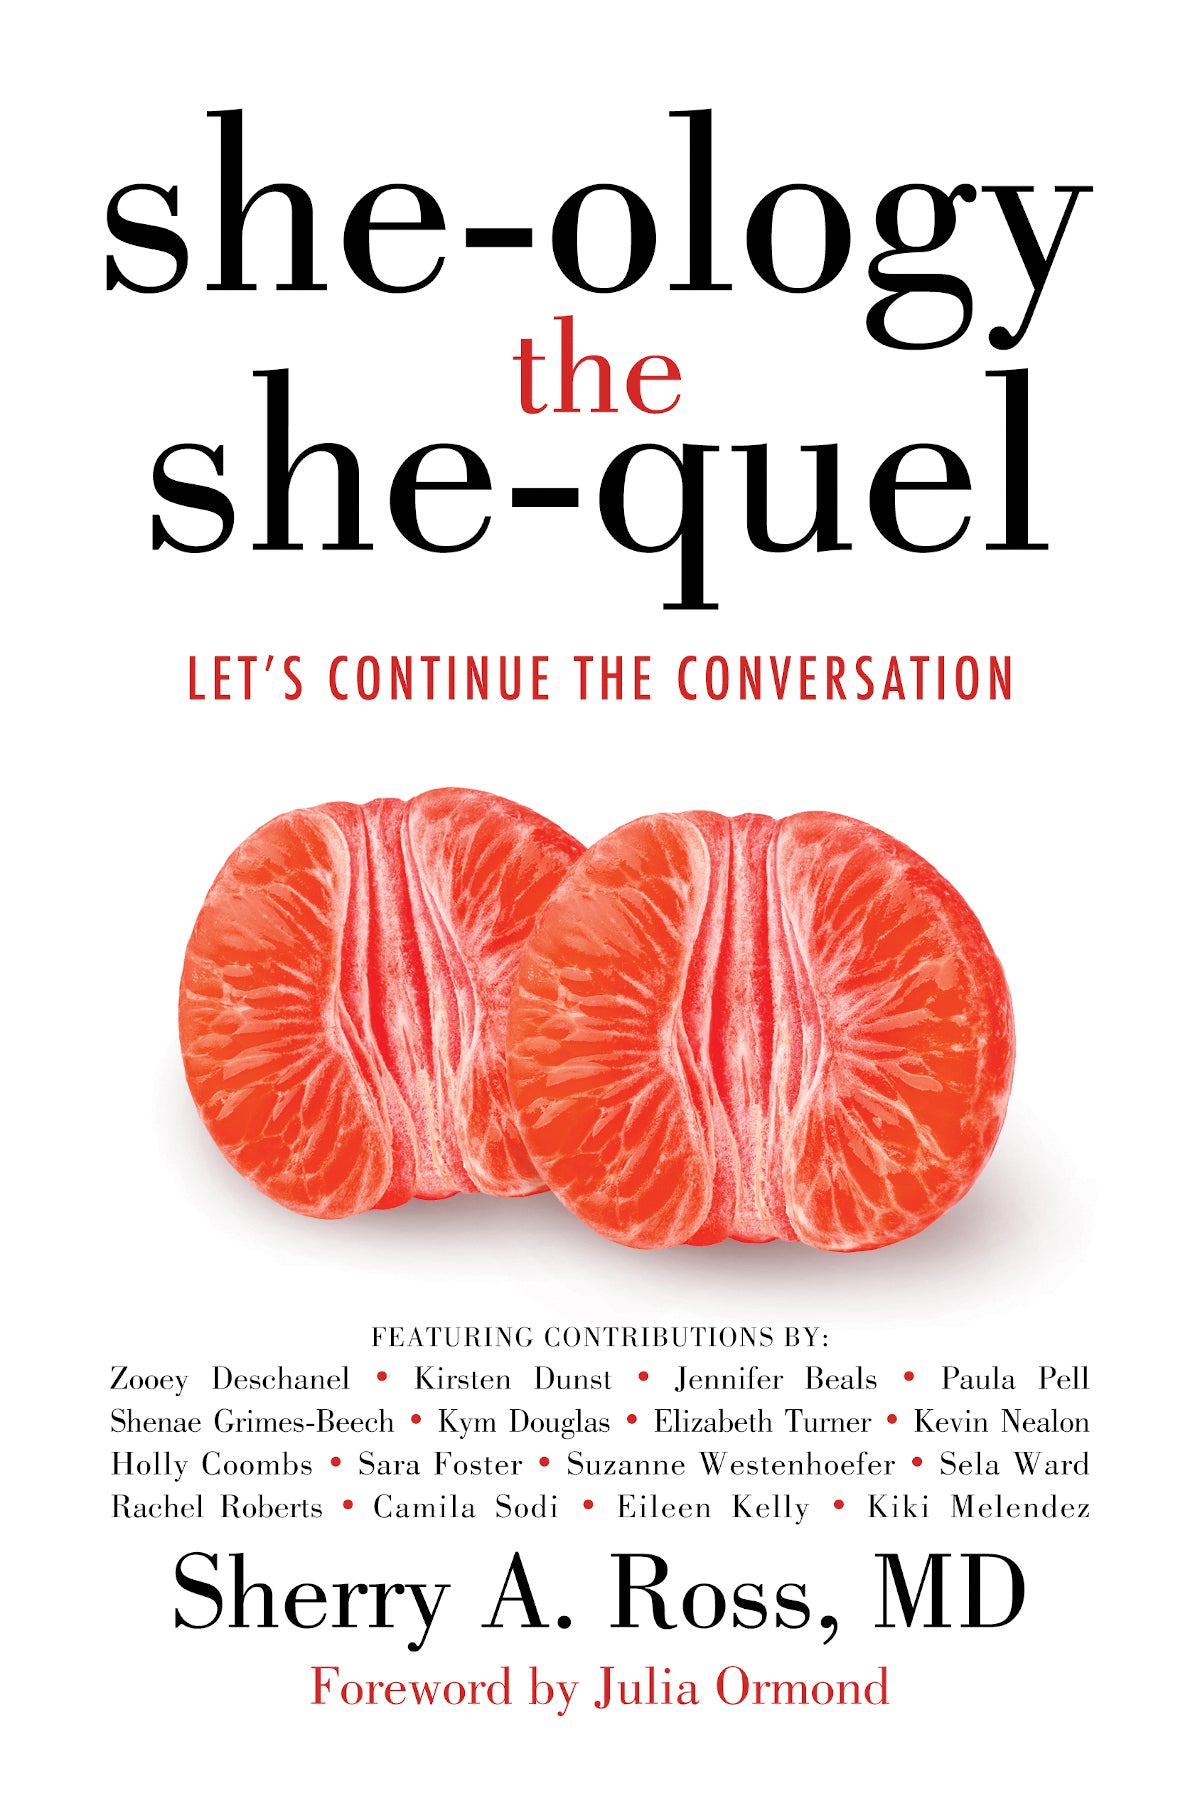 She-ology The Sequel - Simon & Schuster